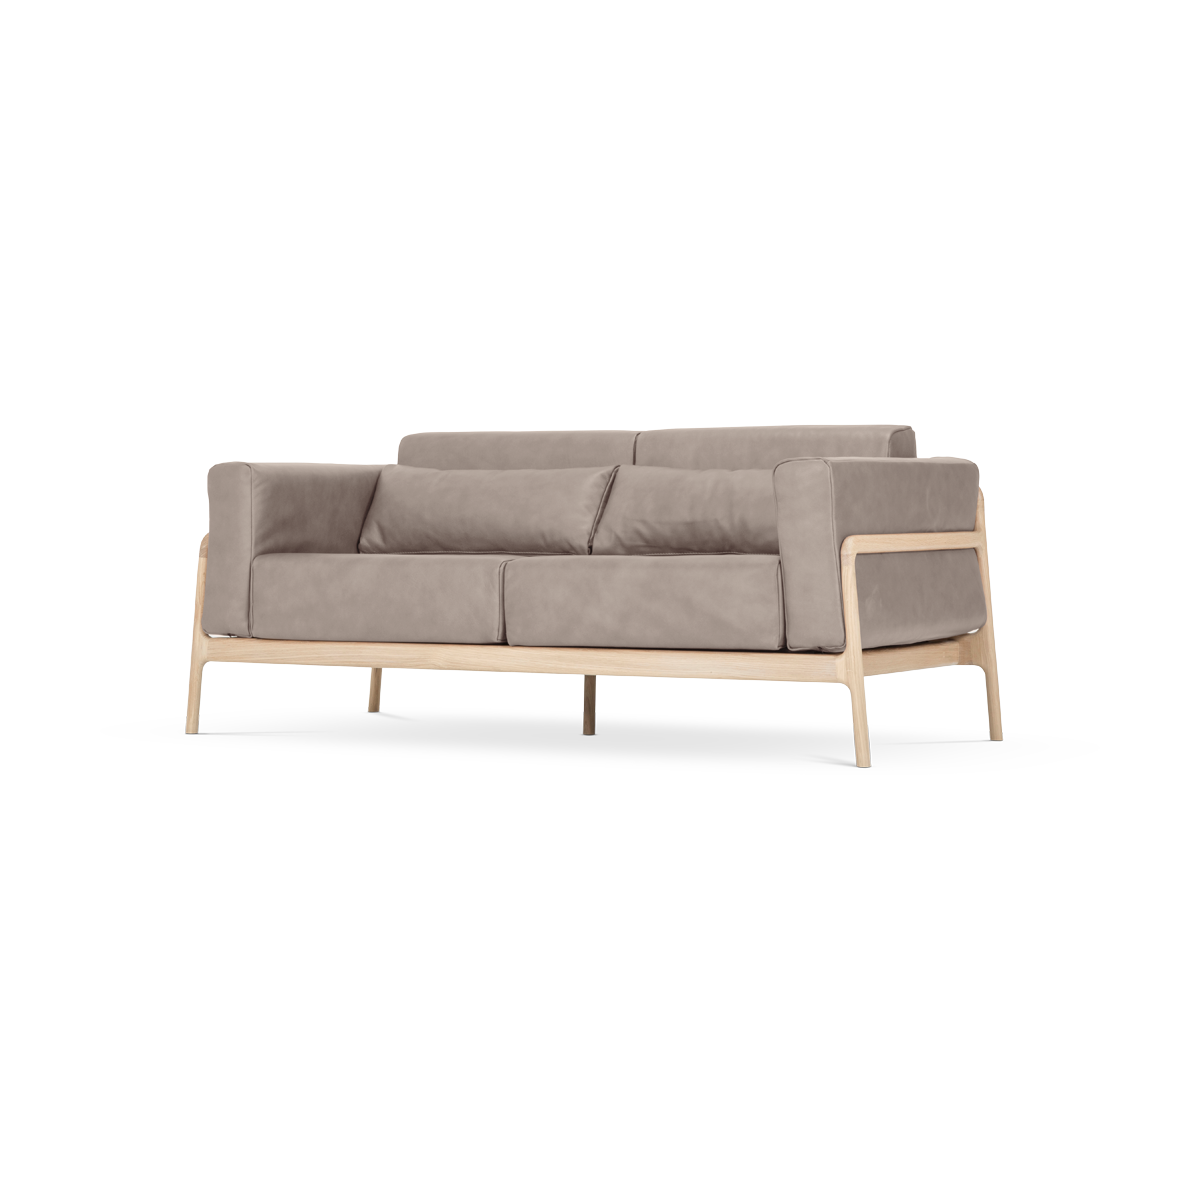 Fawn sofa 2 seater bank dakar leather stone 1436 - 180 cm